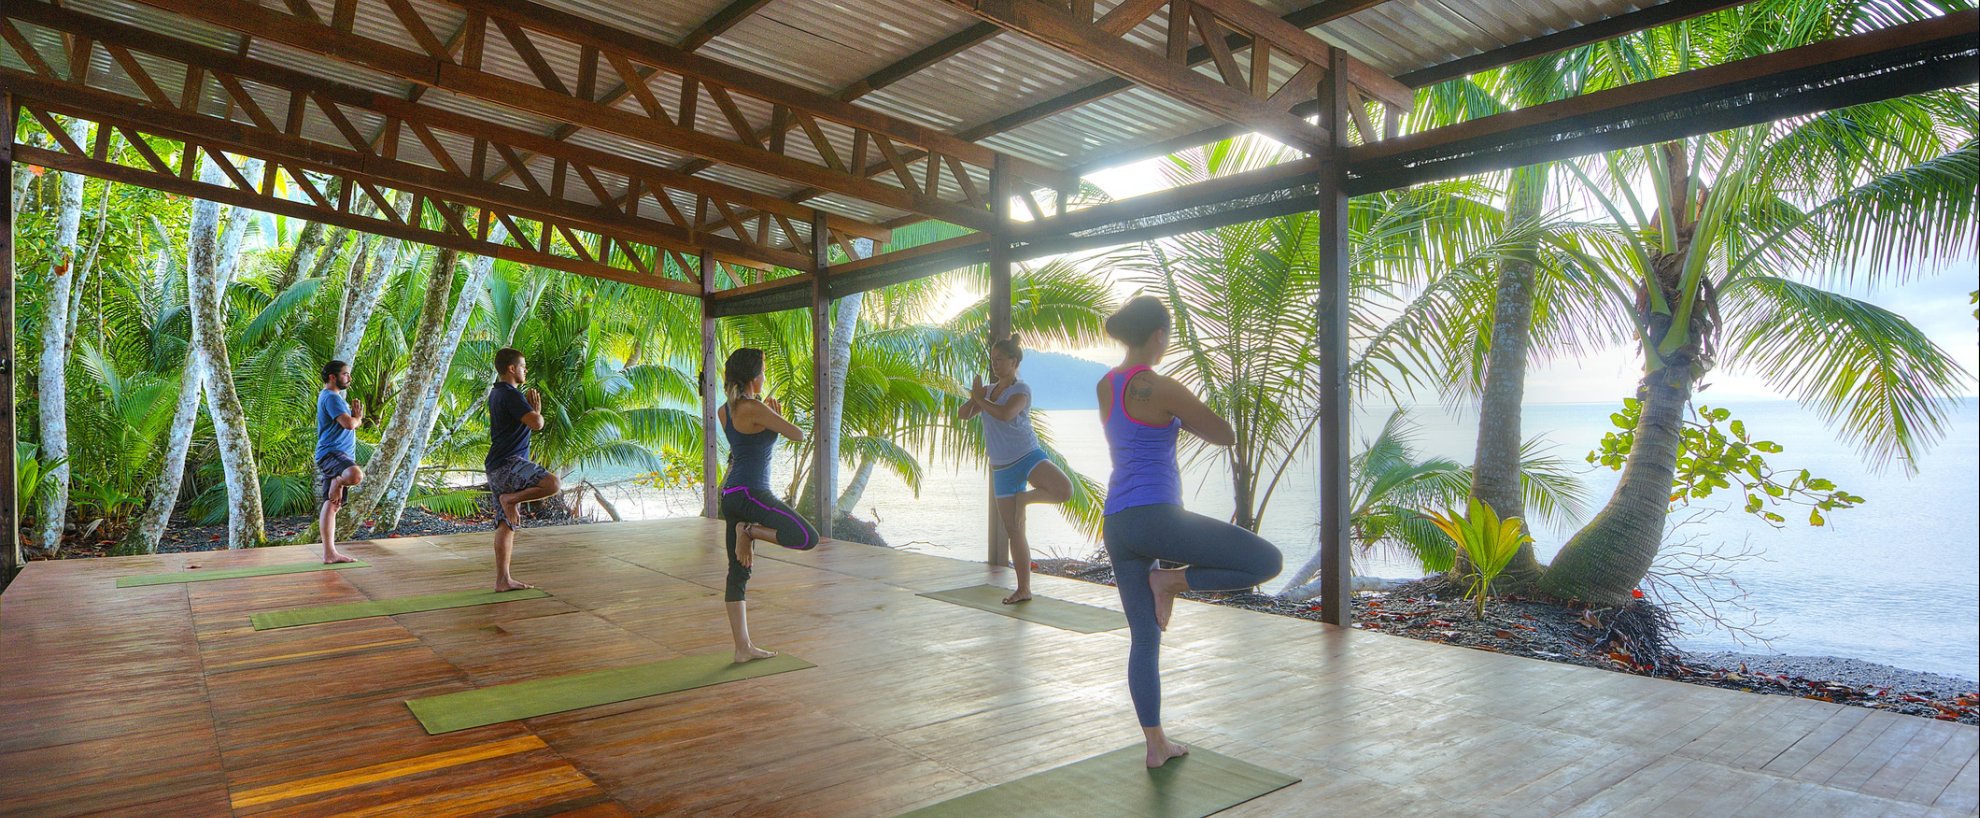 Costa Rica Playa Nicuesa Rainforest Lodge Yoga Yogahalle Palmen Meer Pazifik